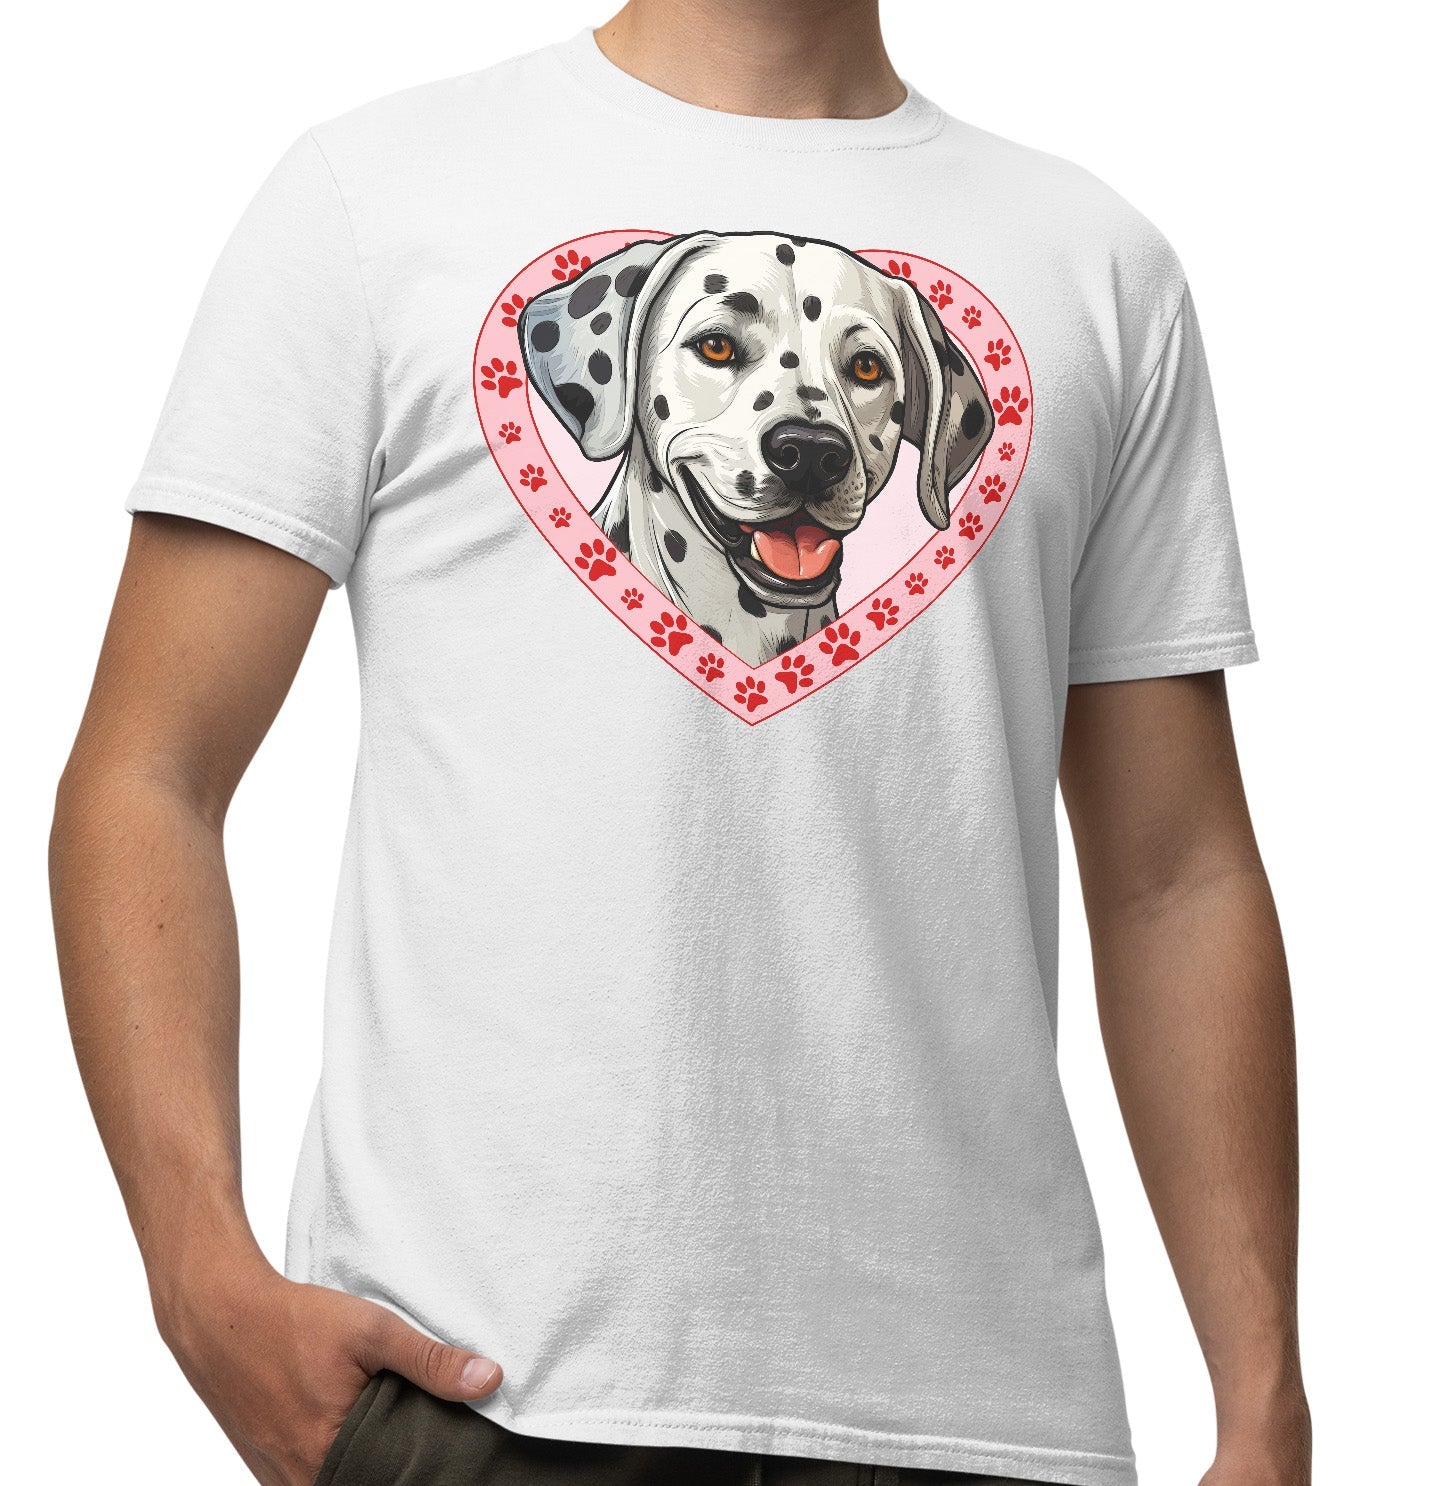 Dalmatian Illustration In Heart - Adult Unisex T-Shirt